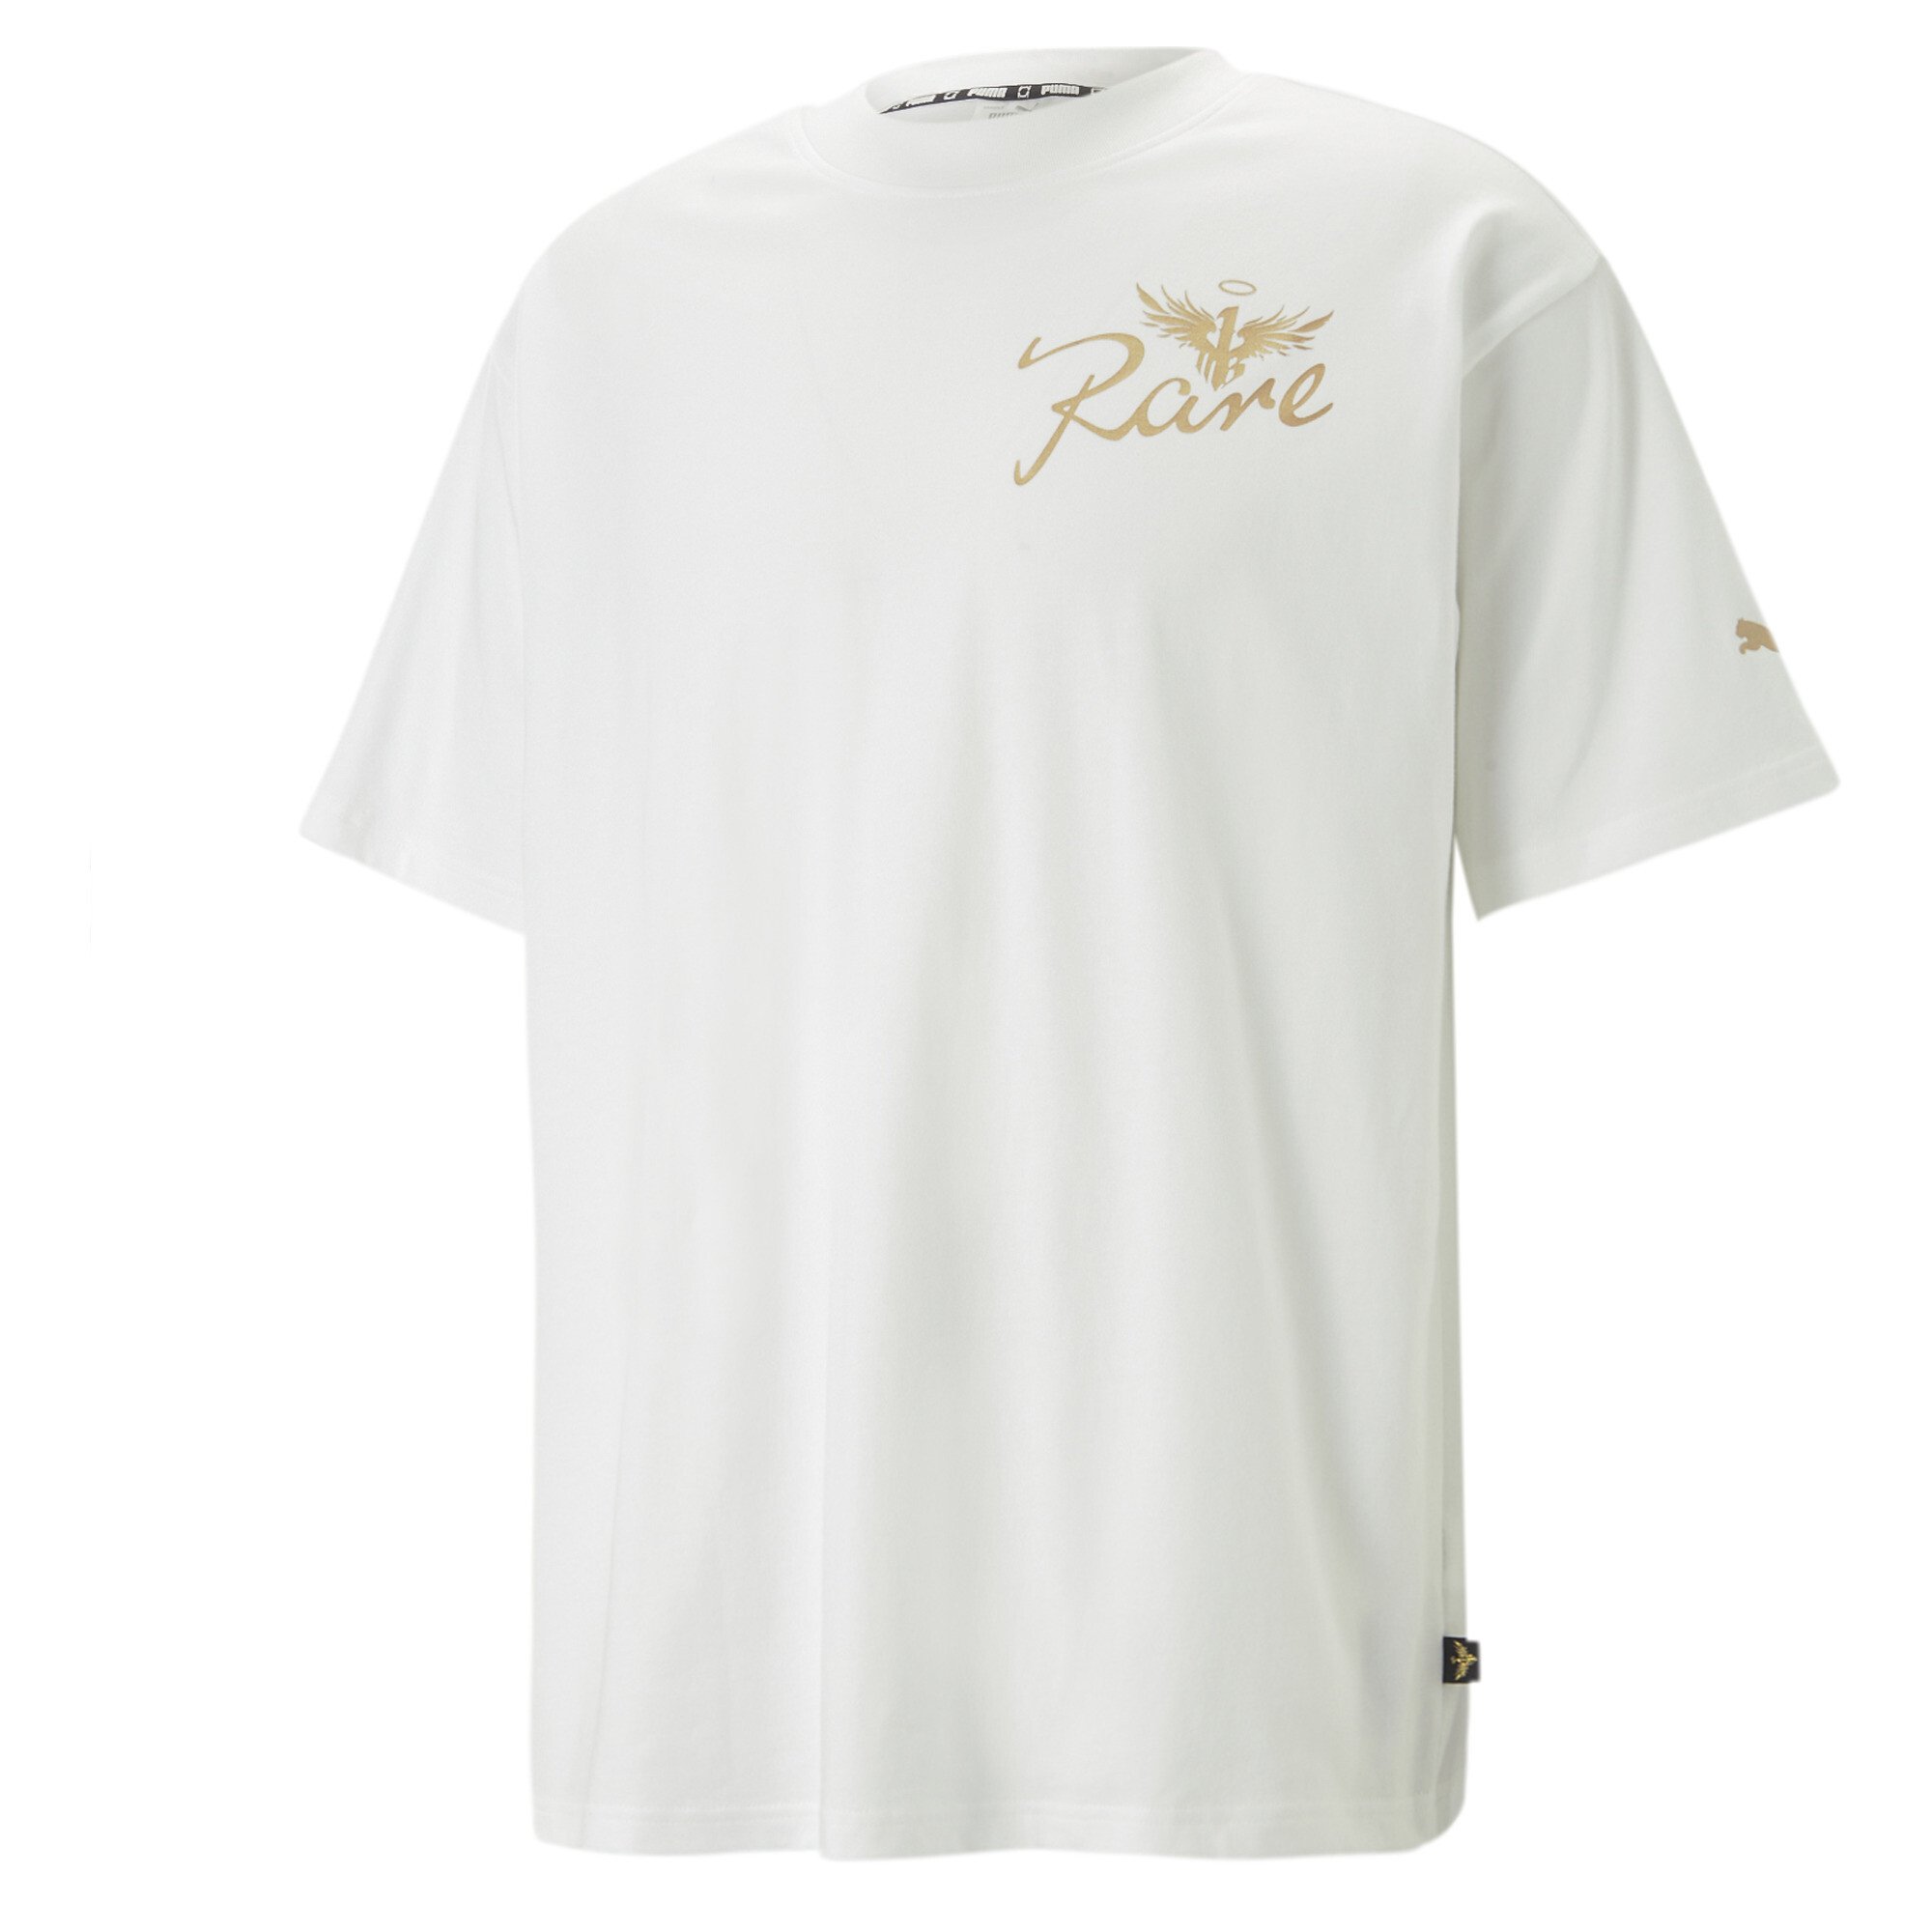 Men's PUMA X Melo Boxy Basketball T-Shirt Men In 20 - White, Size Large